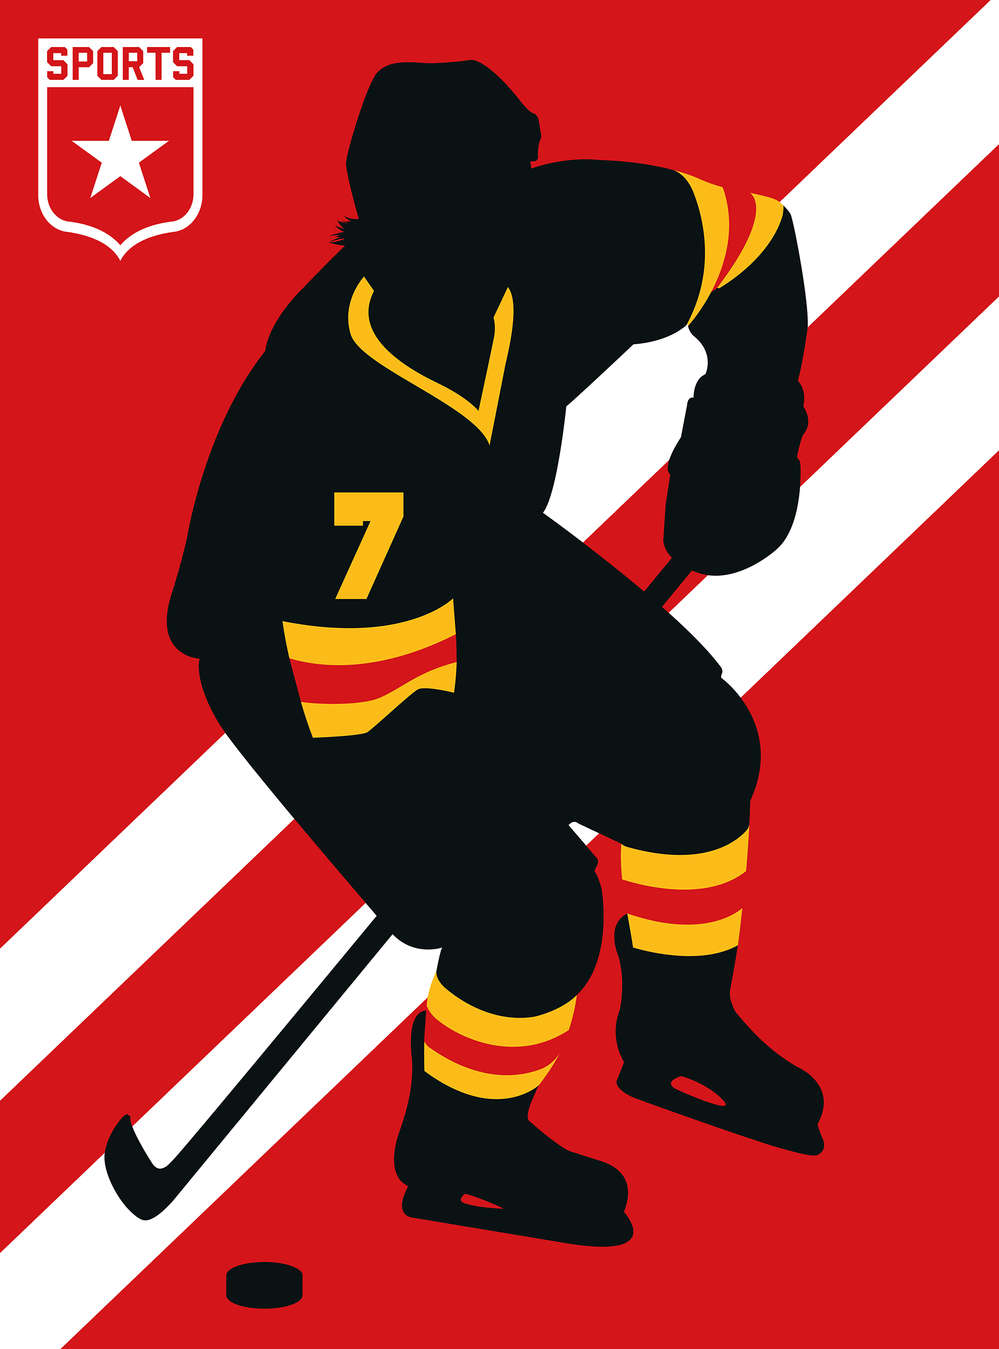             Photo wallpaper sport ice hockey motif player icon
        